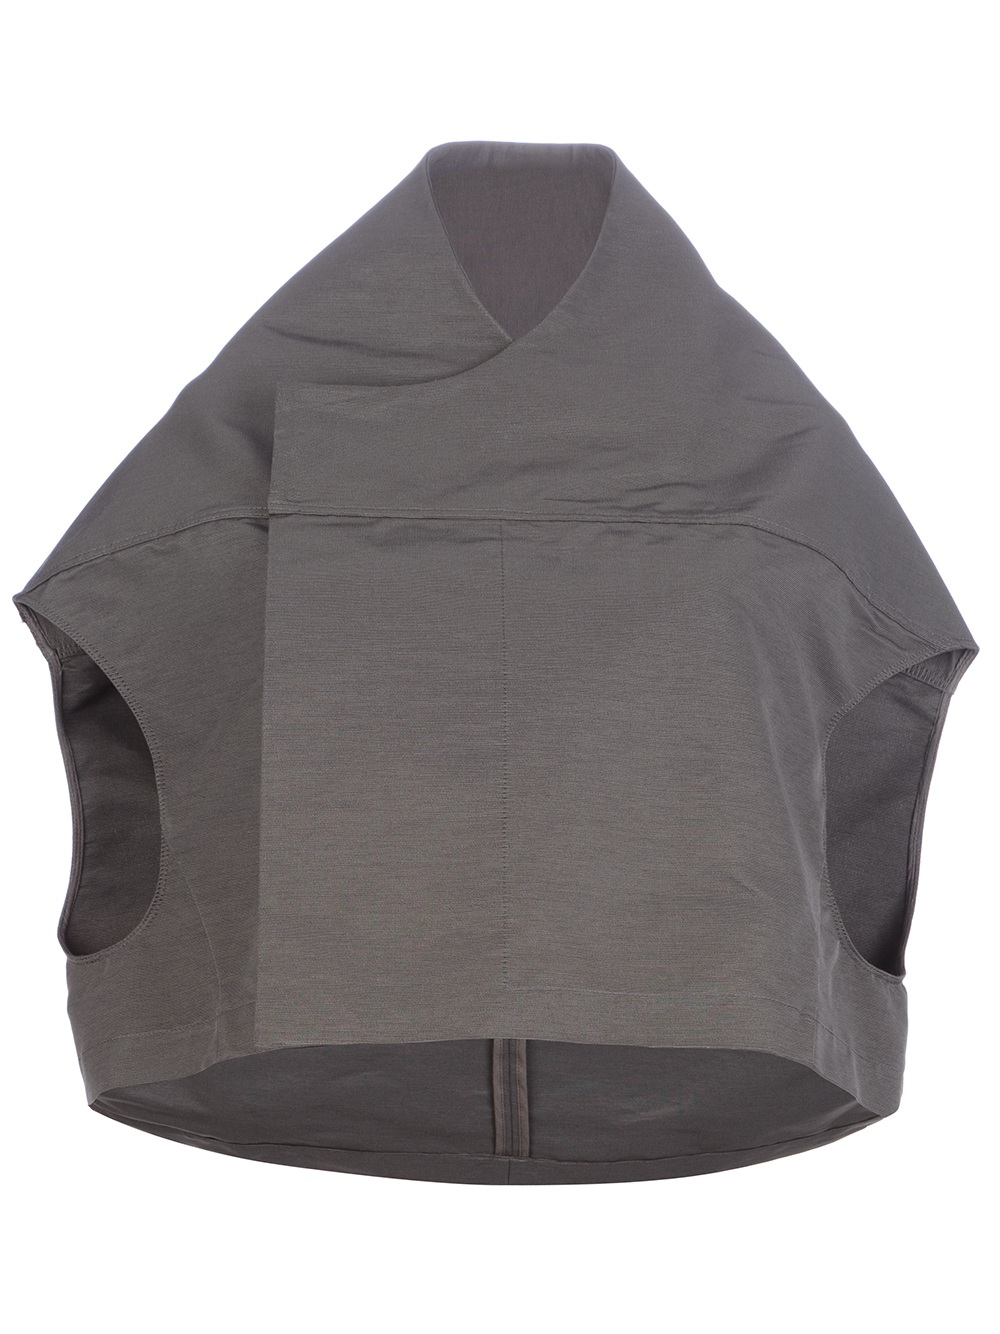 Rick Owens Sleeveless Cape Jacket in Grey (Gray) - Lyst